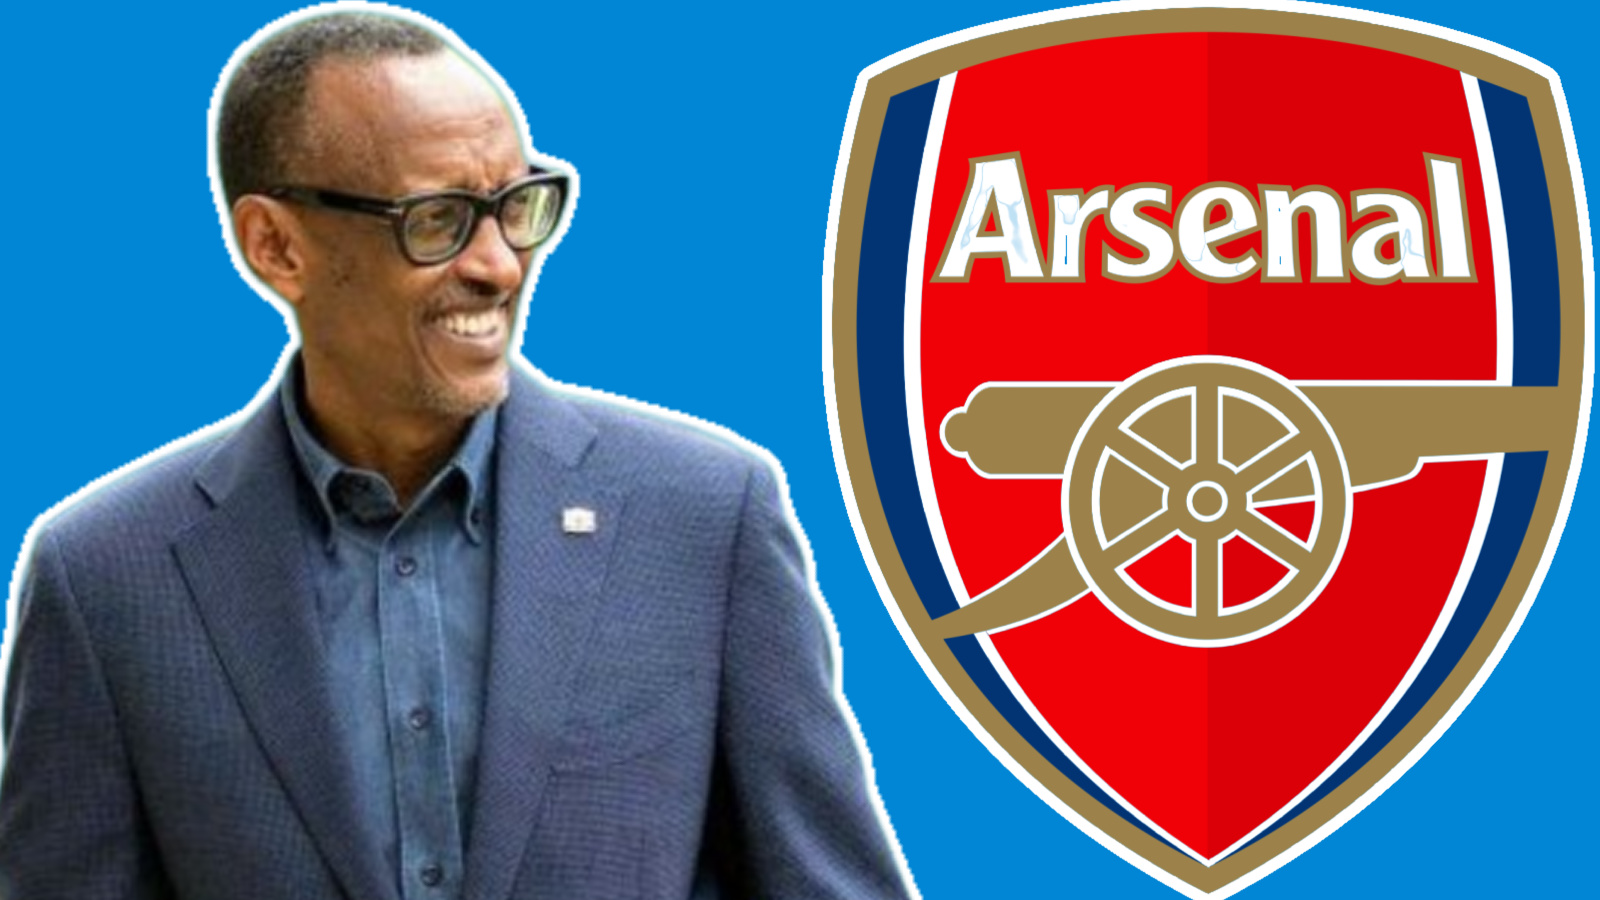 Rwanda President Paul Kagame slammed Arsenal on Twitter following the loss to Brentford